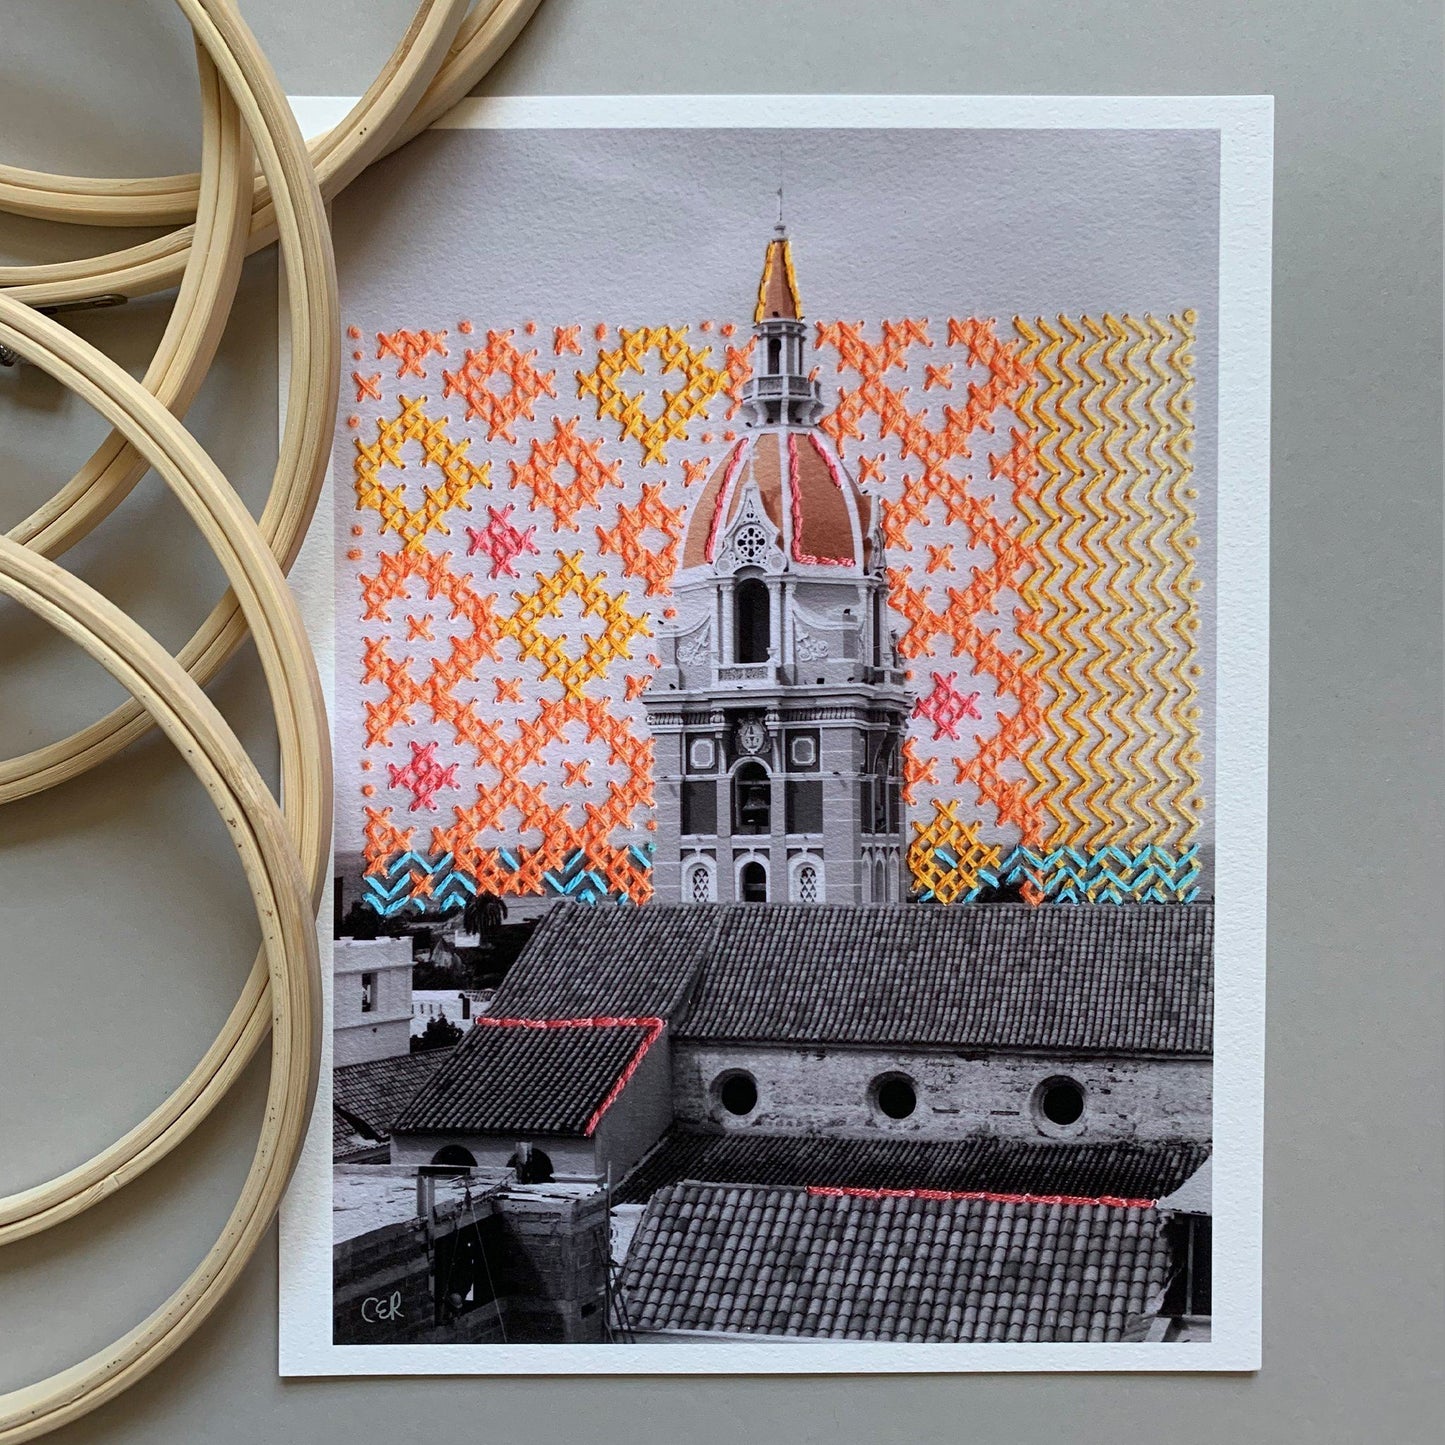 Tejiendo La Heroica: Hand embroidery art print - Catalina Escallon